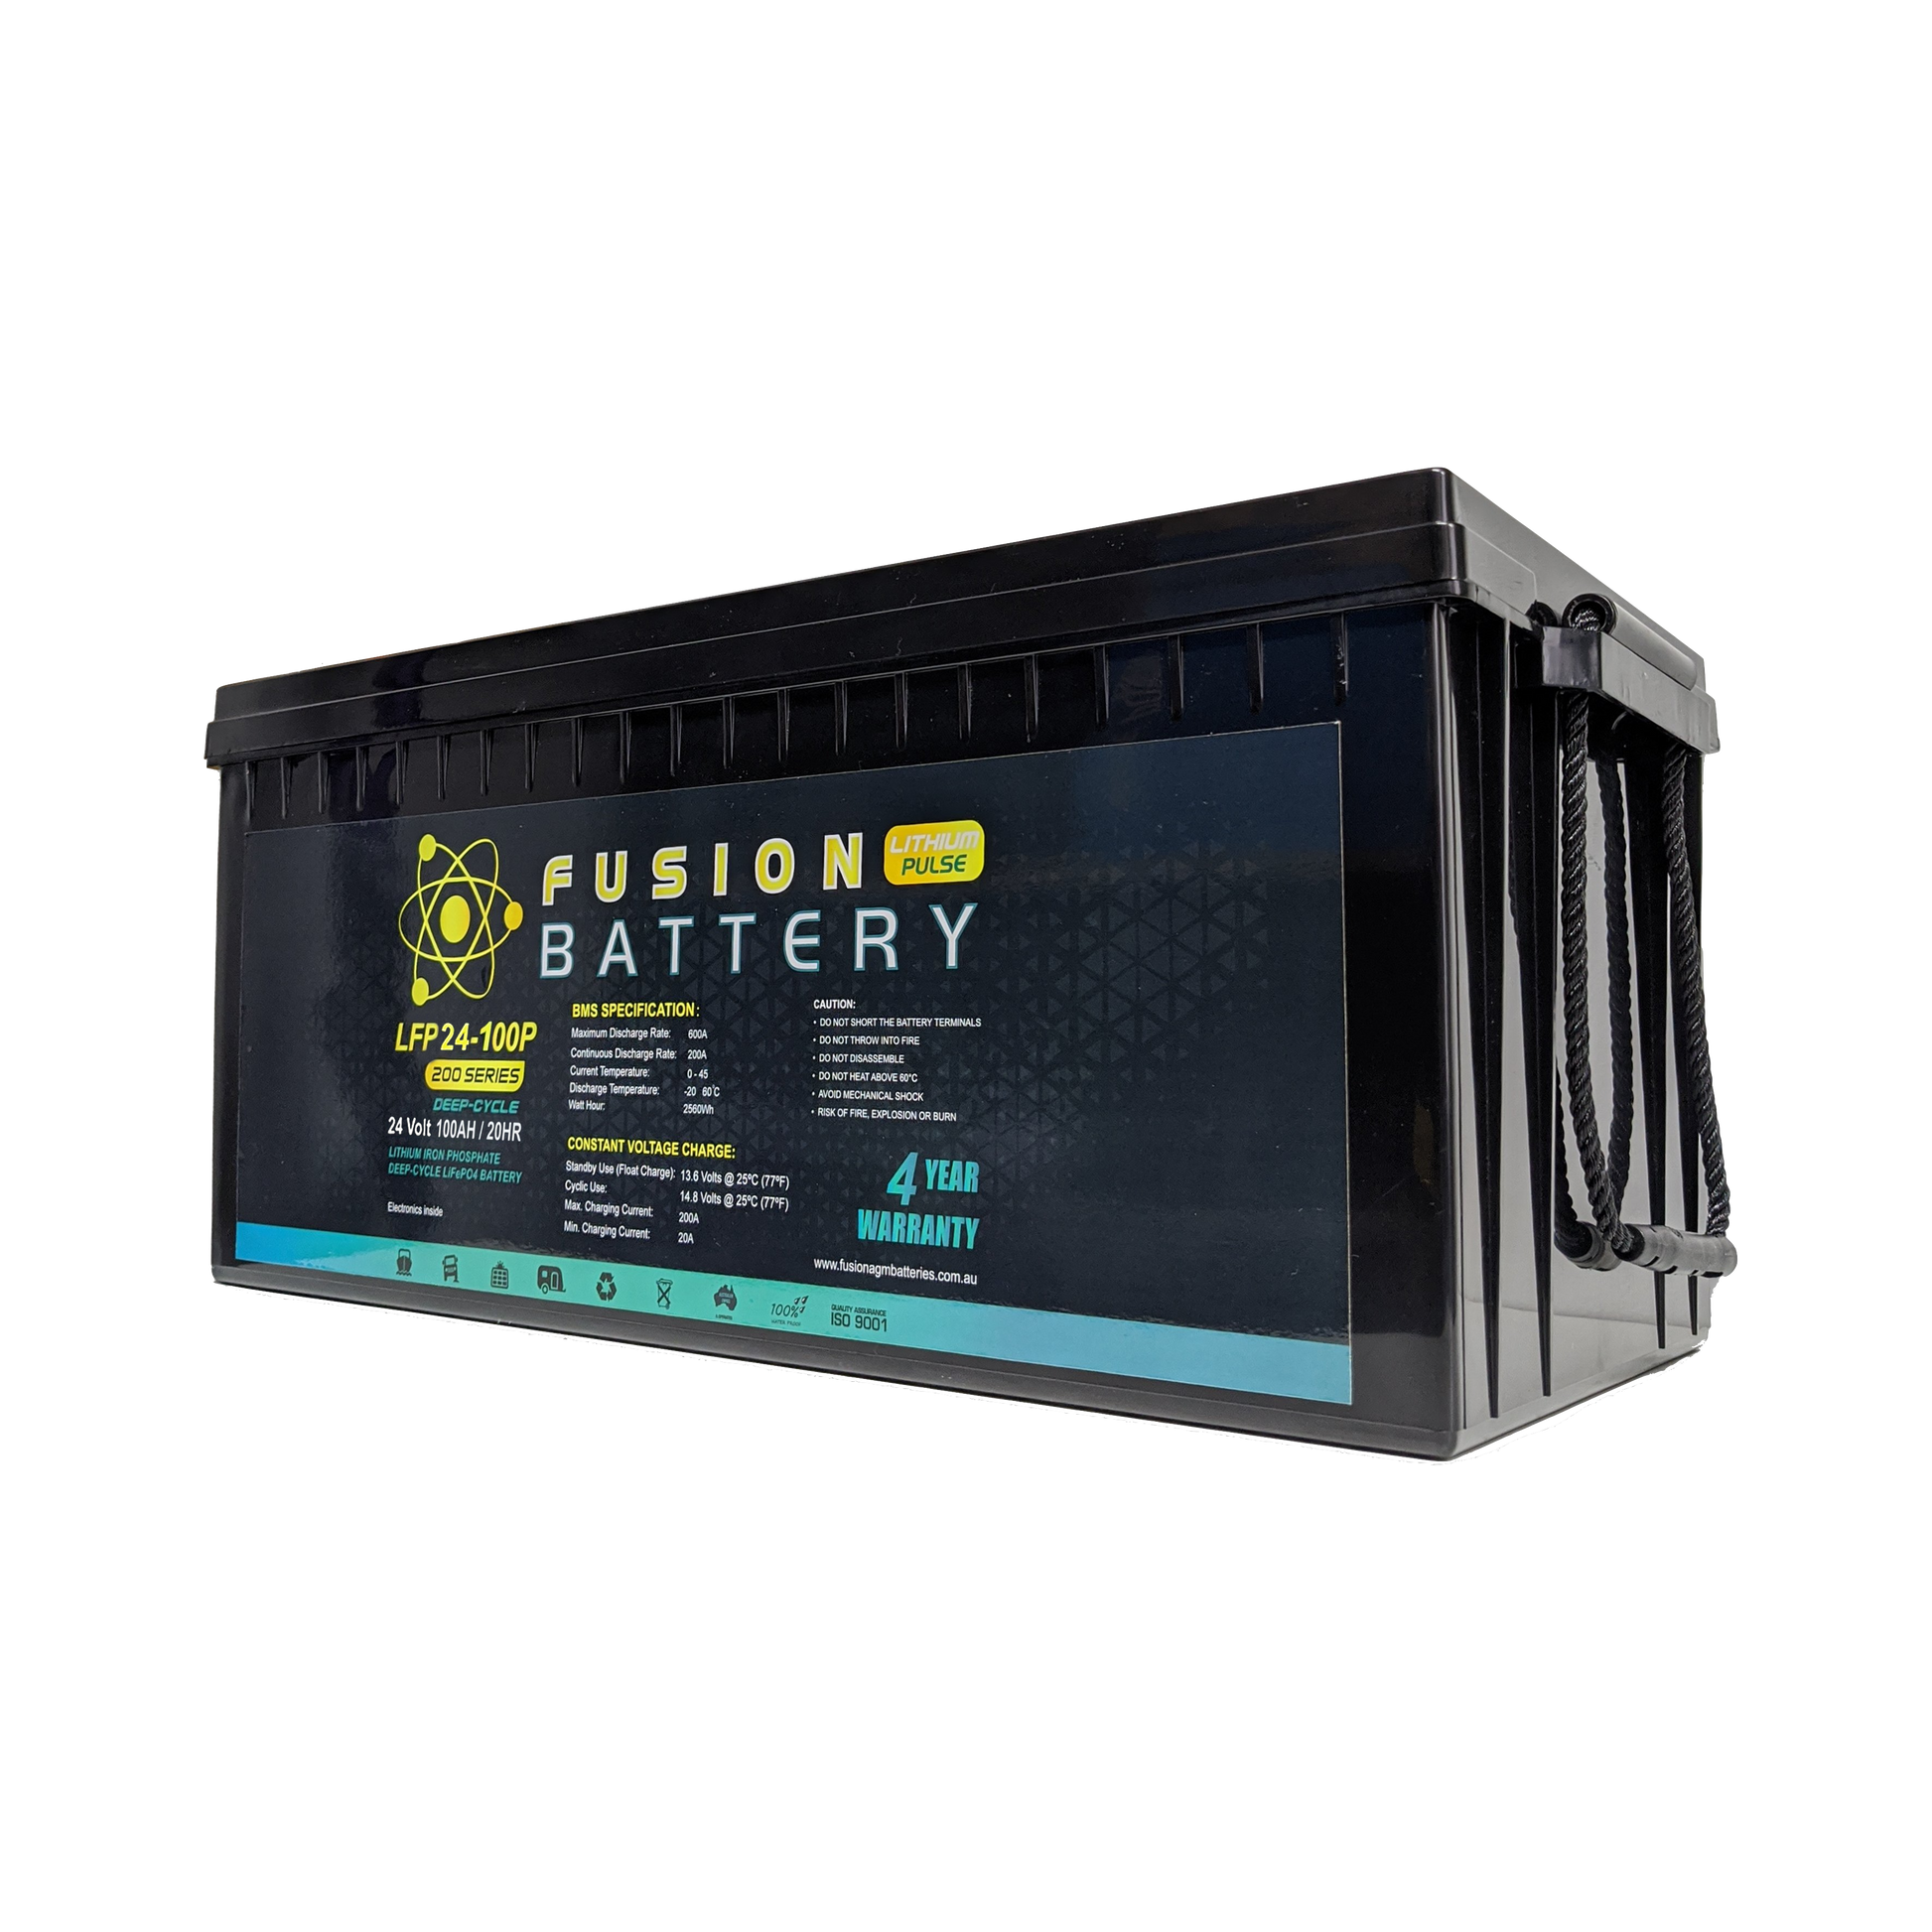 Fusion Pulse 24v 100Ah Lithium Battery – MarineBatteryCo.